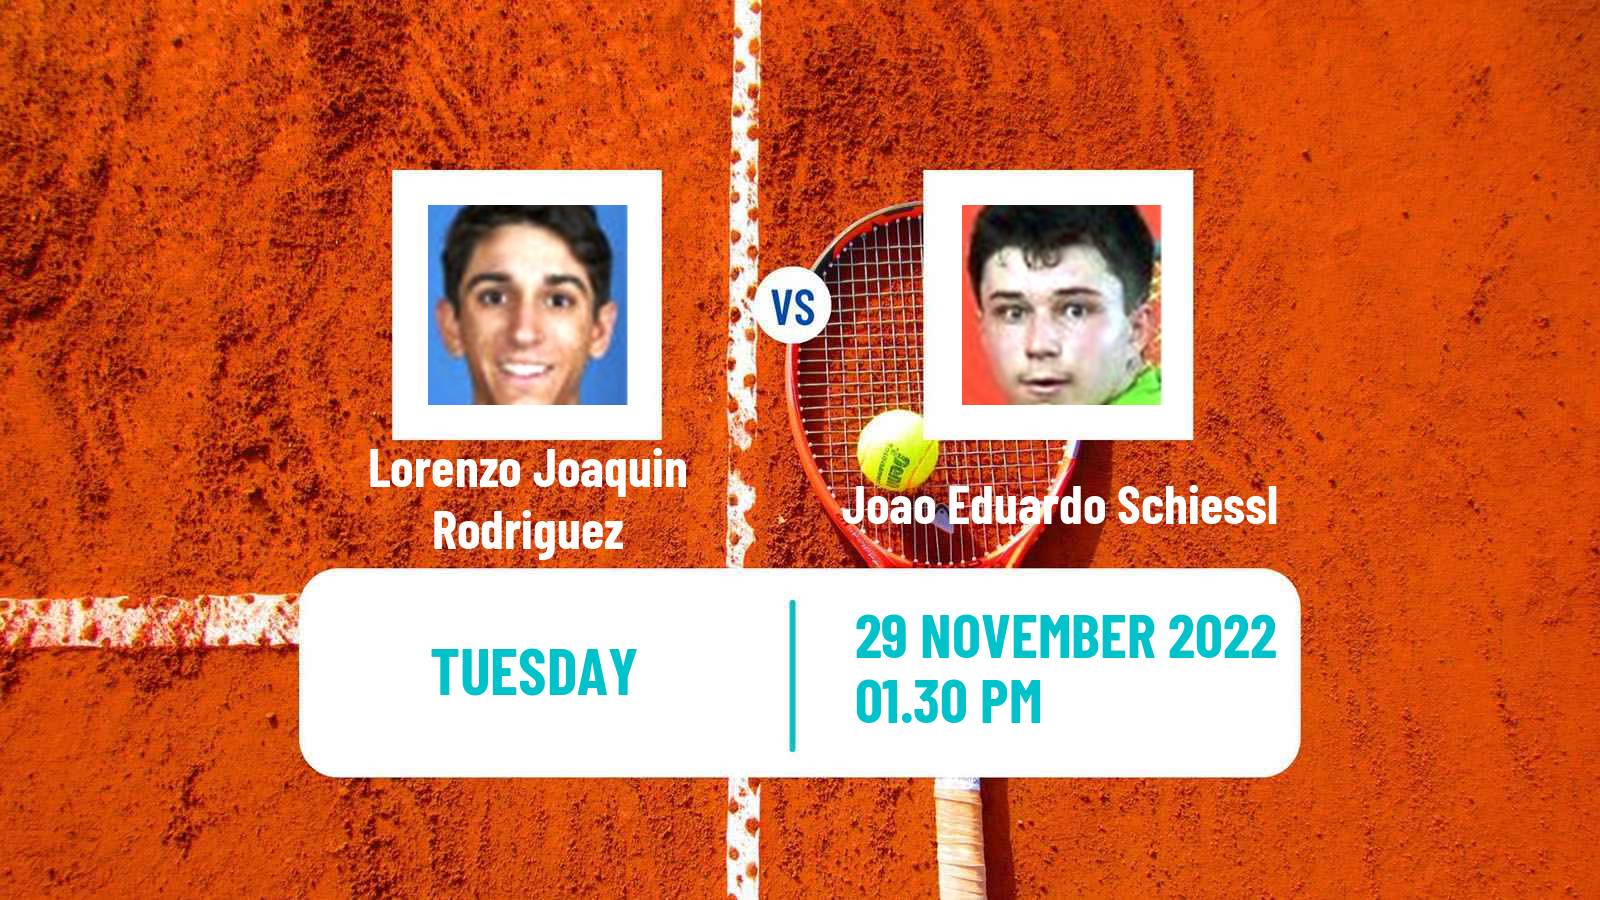 Tennis ITF Tournaments Lorenzo Joaquin Rodriguez - Joao Eduardo Schiessl